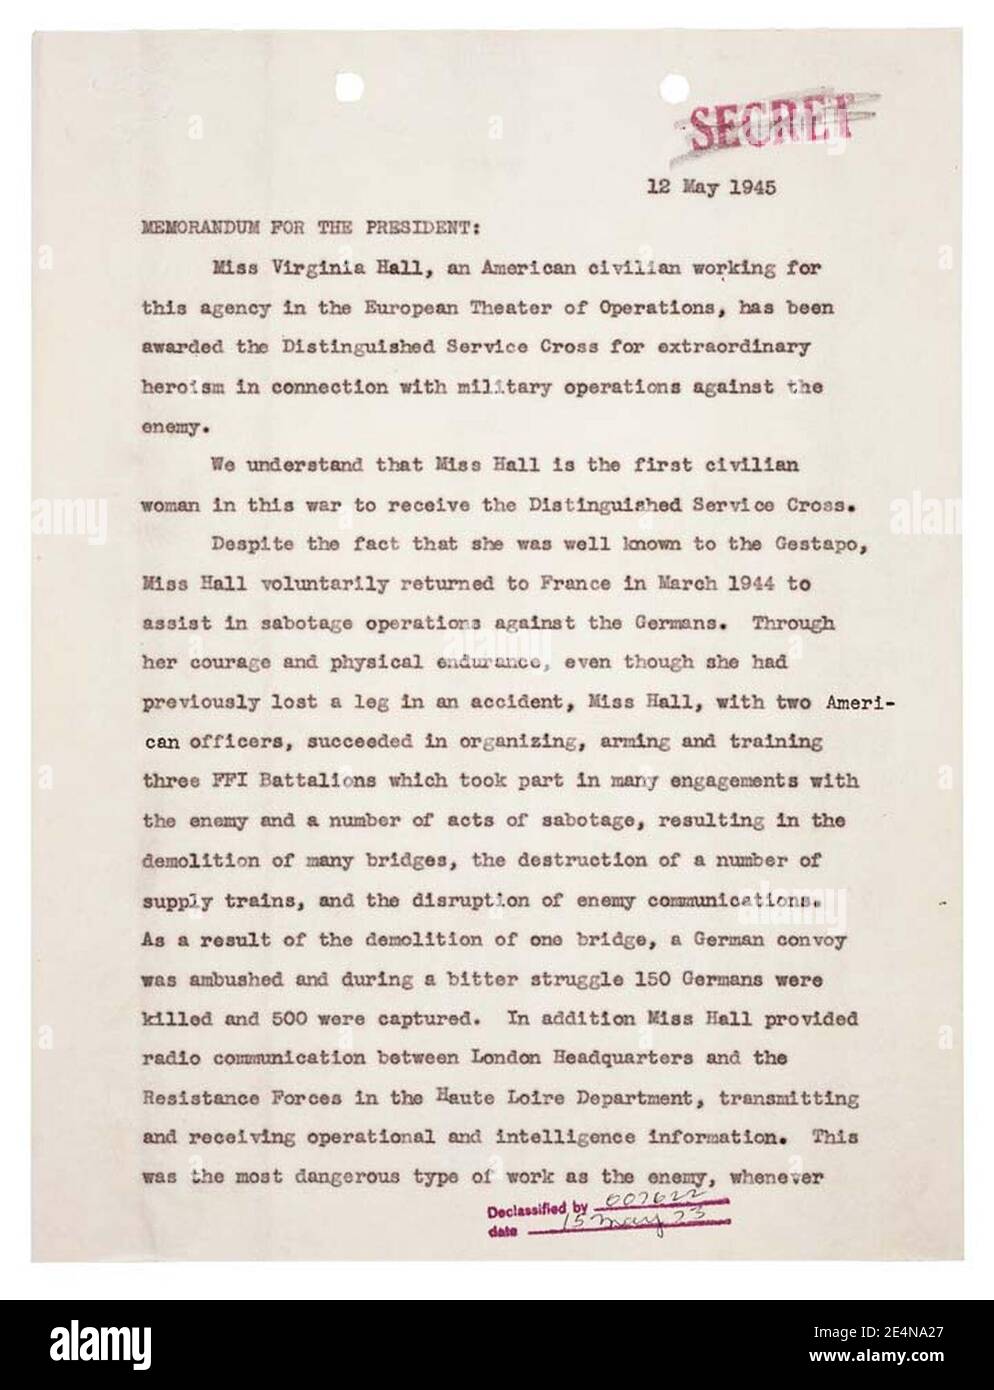 Memorandum for the President from William J. Donovan Regarding Distinguished Service Cross (DSC) Award to Virginia Hall, 05-12-1945, Page 1 of 2 (5669348033). Stock Photo